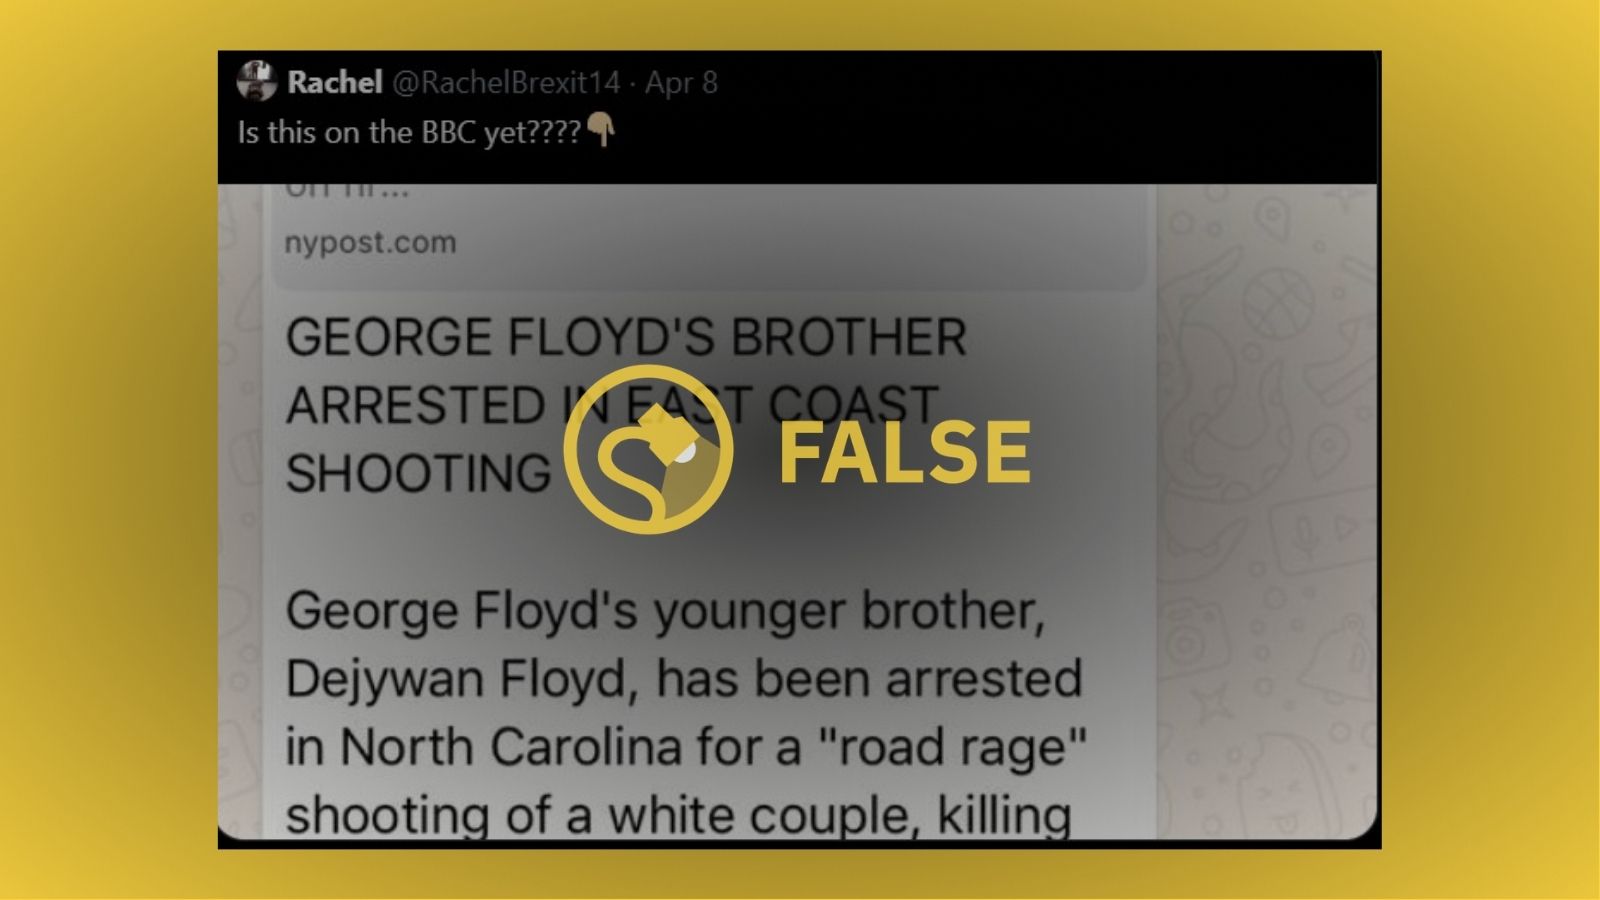 Dejywan Floyd is Not George Floyd’s Brother